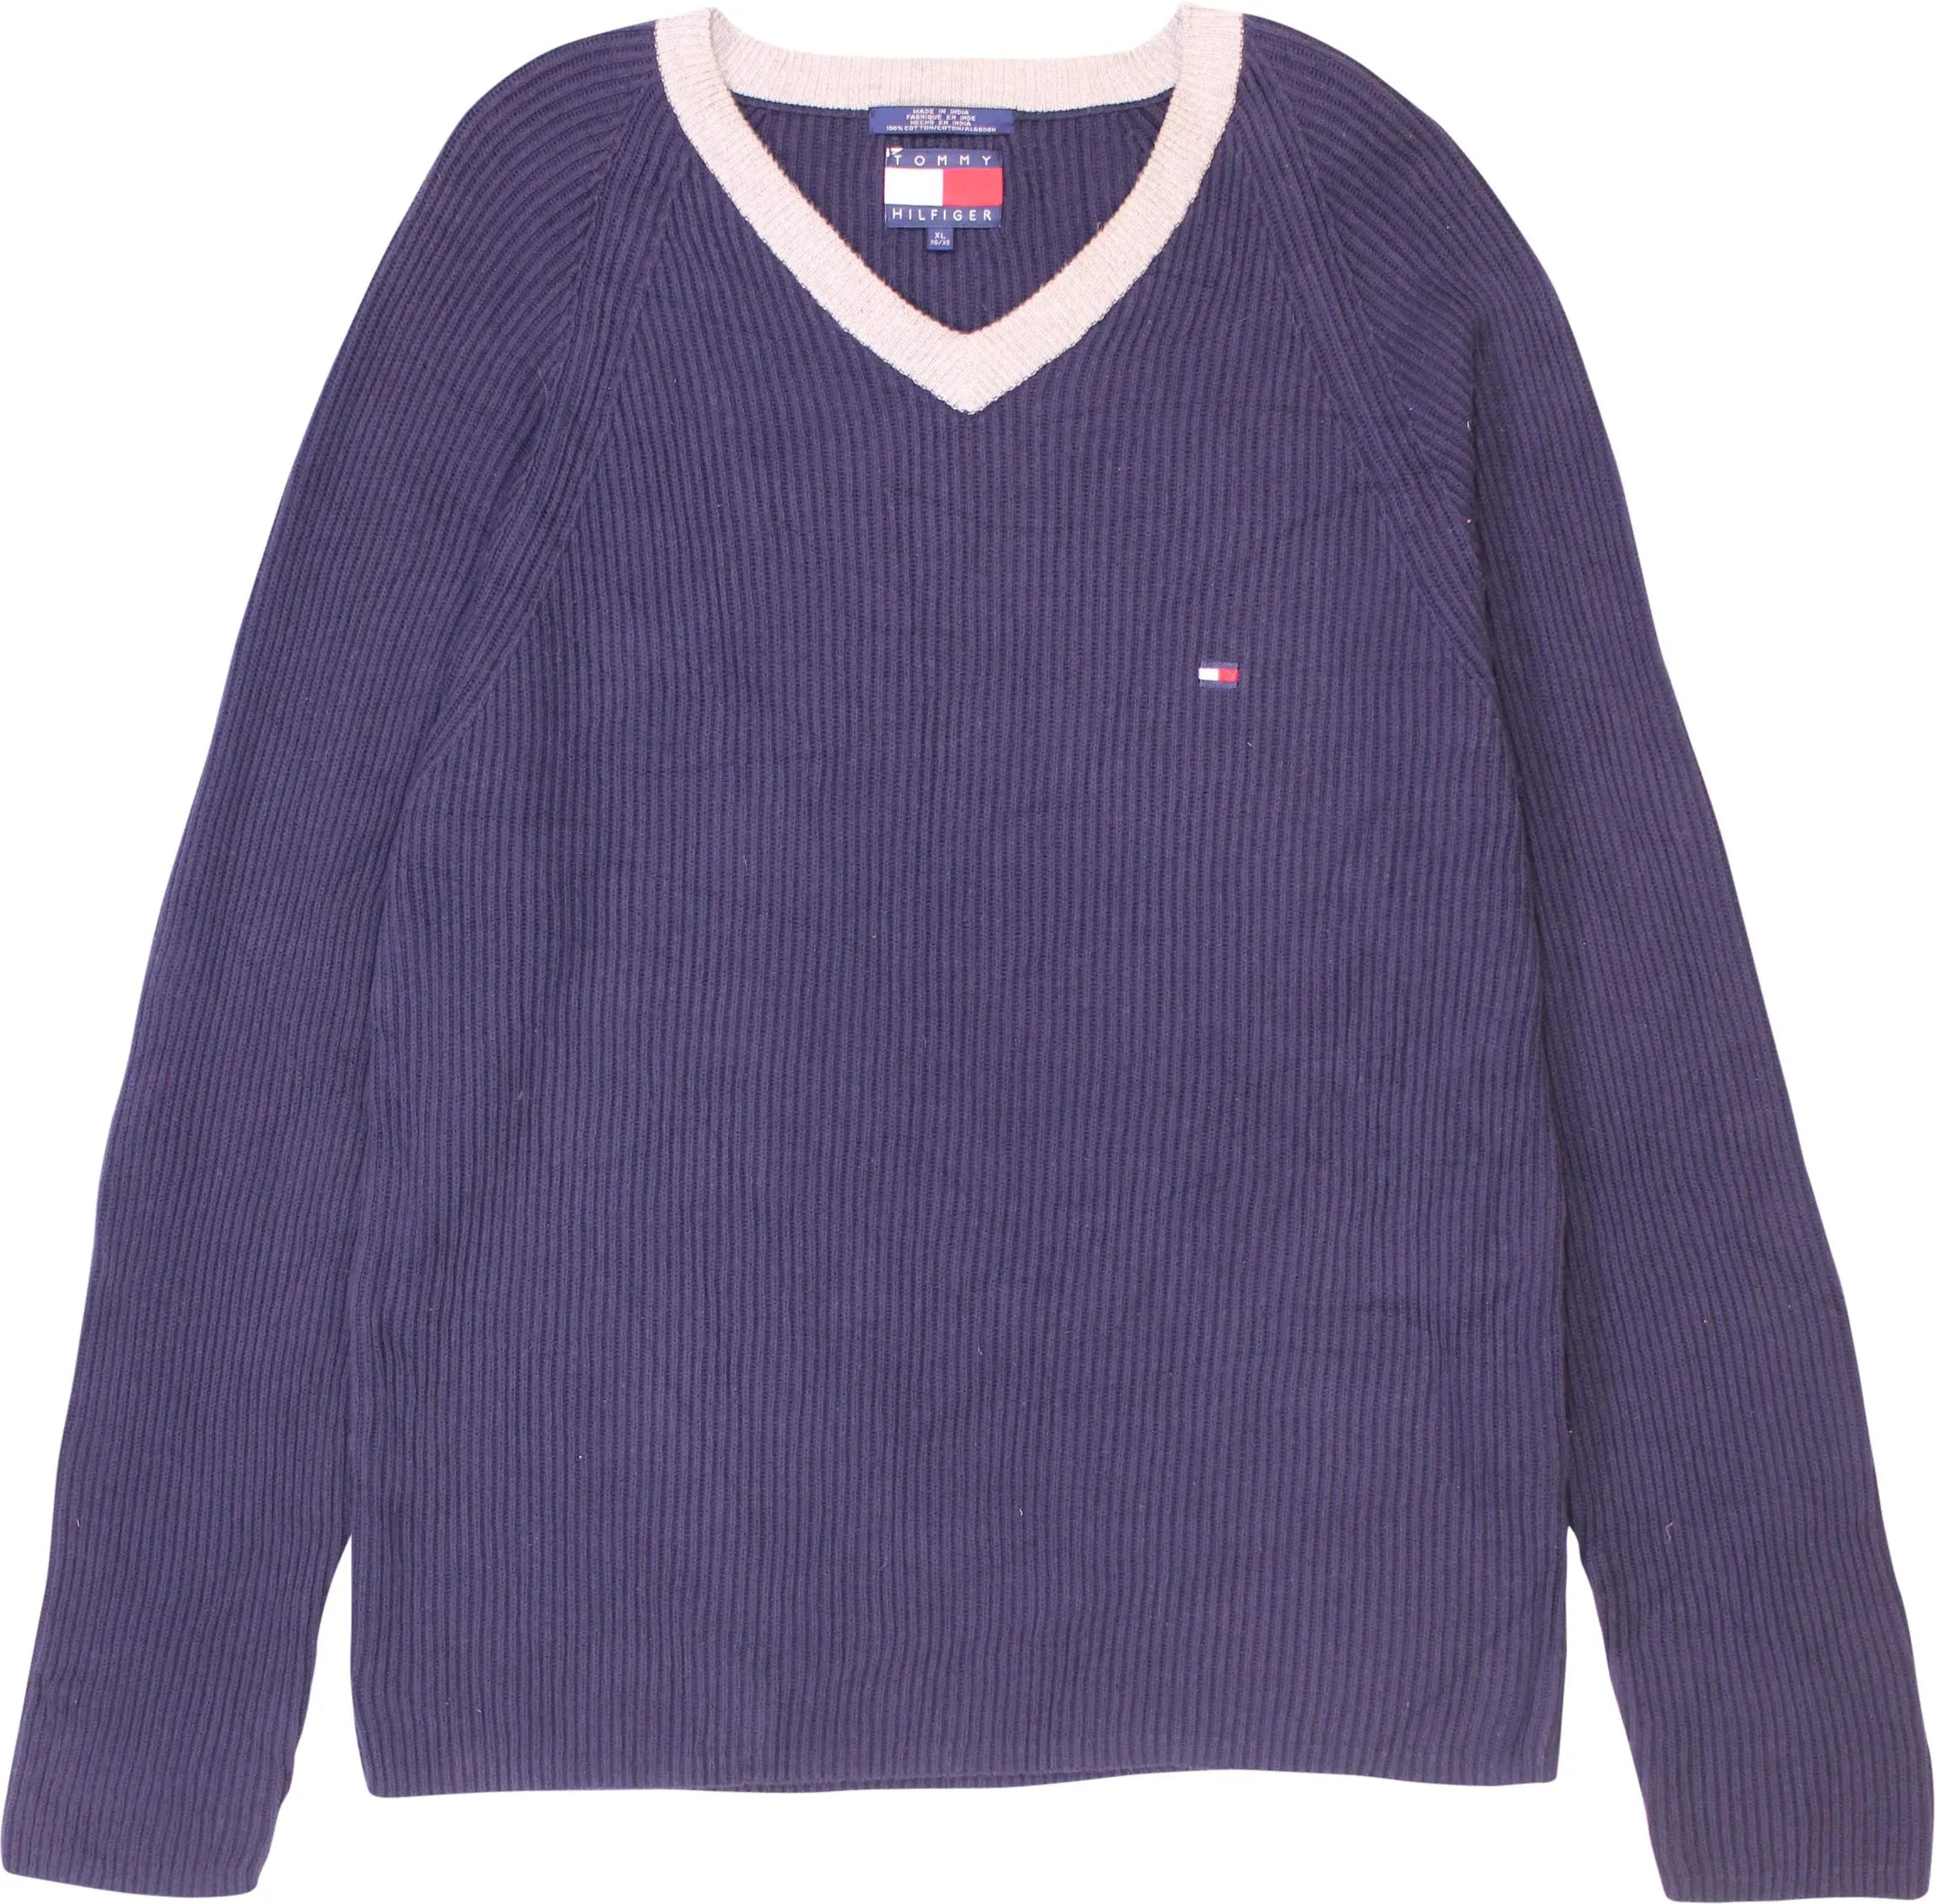 Tommy Hilfiger - Blue V-Neck Sweater by Tommy Hilfiger- ThriftTale.com - Vintage and second handclothing